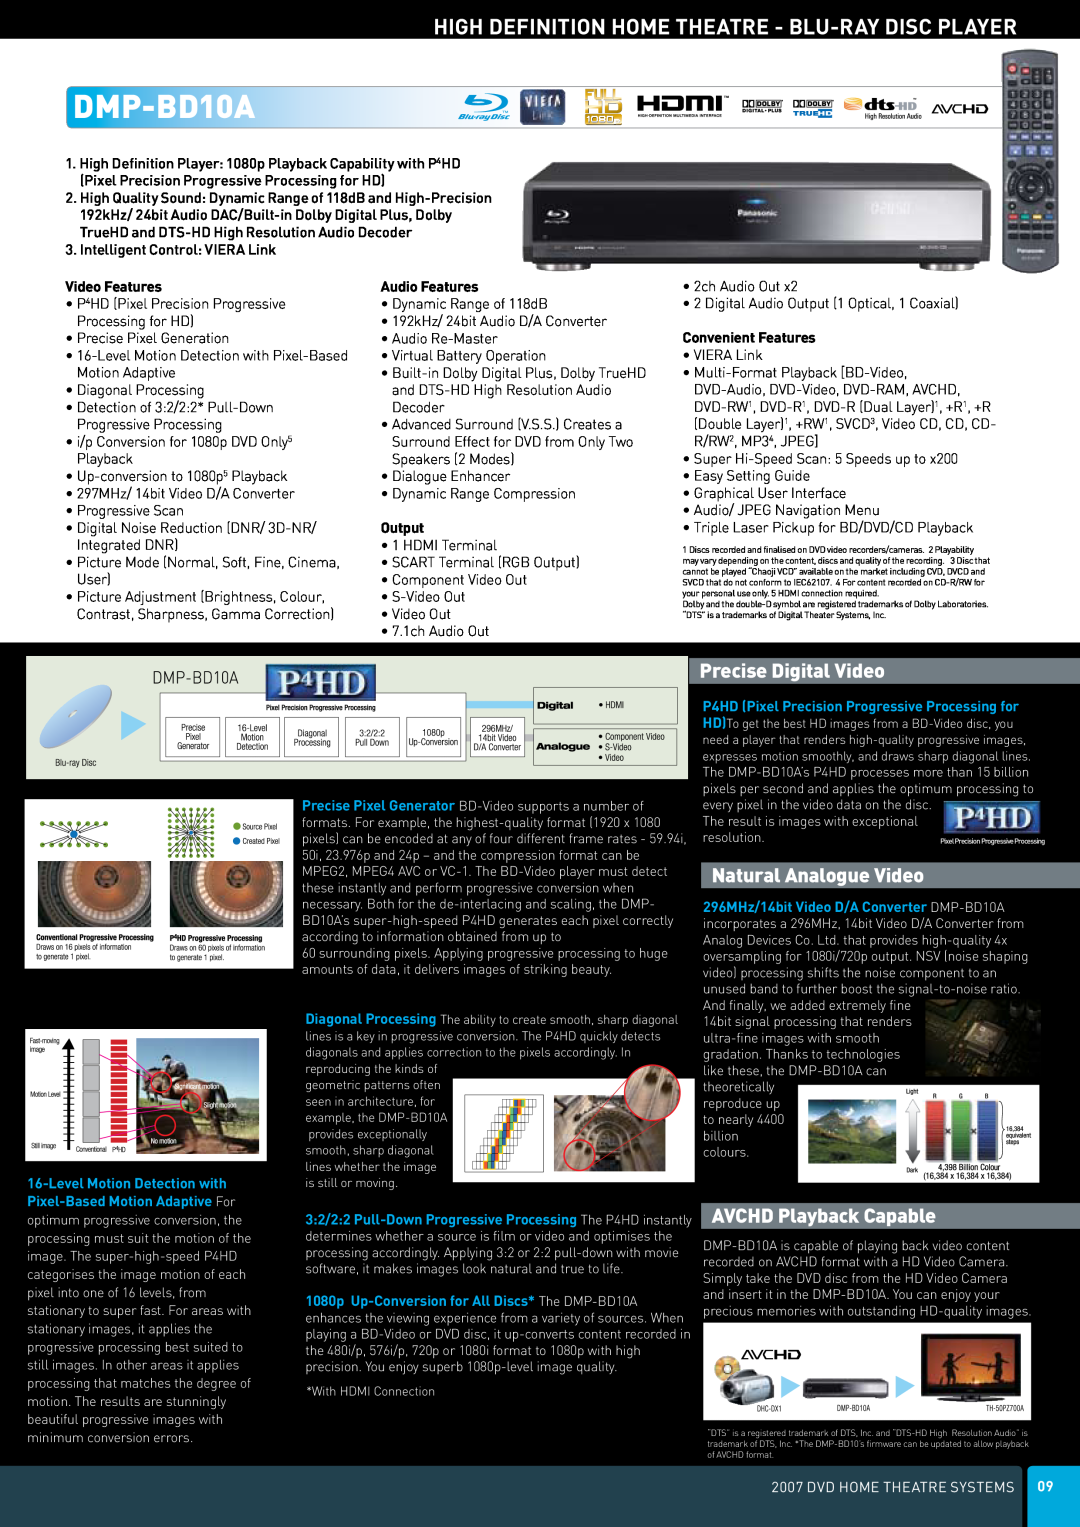 Panasonic DVD Home Theatre System DMP-BD10A, High Definition Home Theatre - Blu-Ray Disc Player, Precise Digital Video 